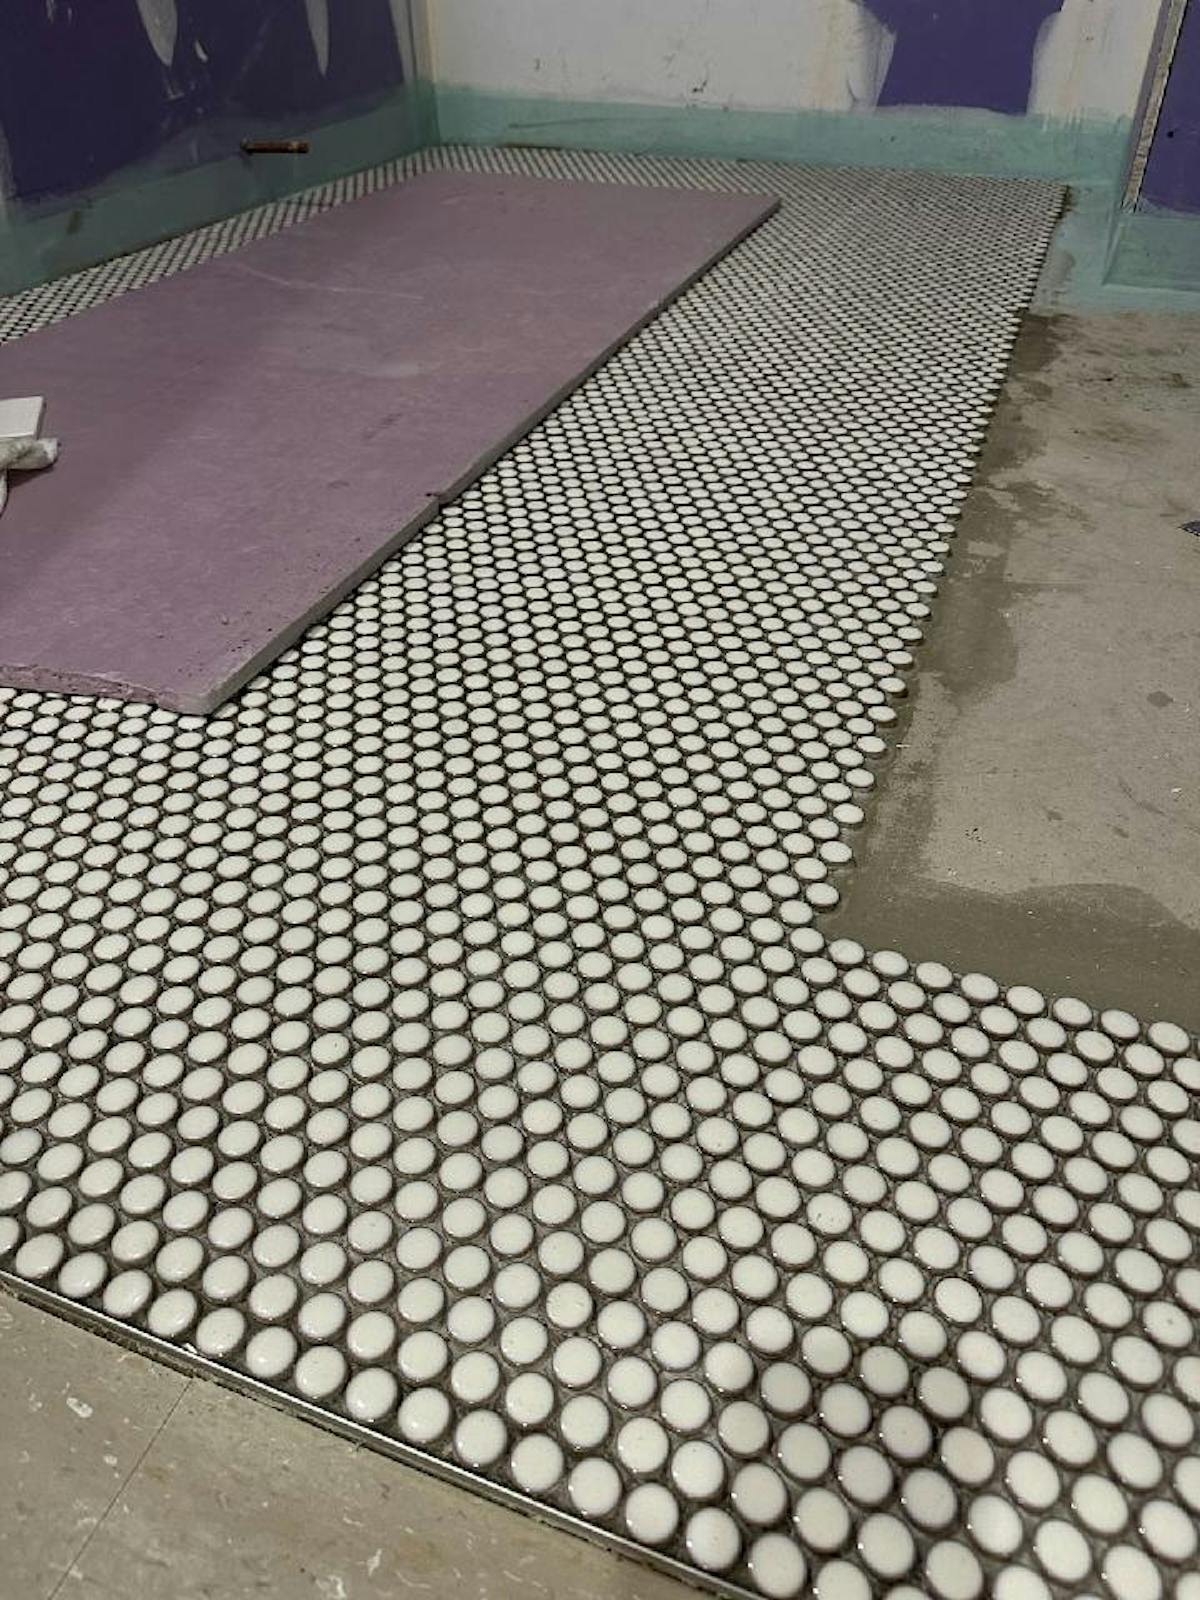 a floor under construction